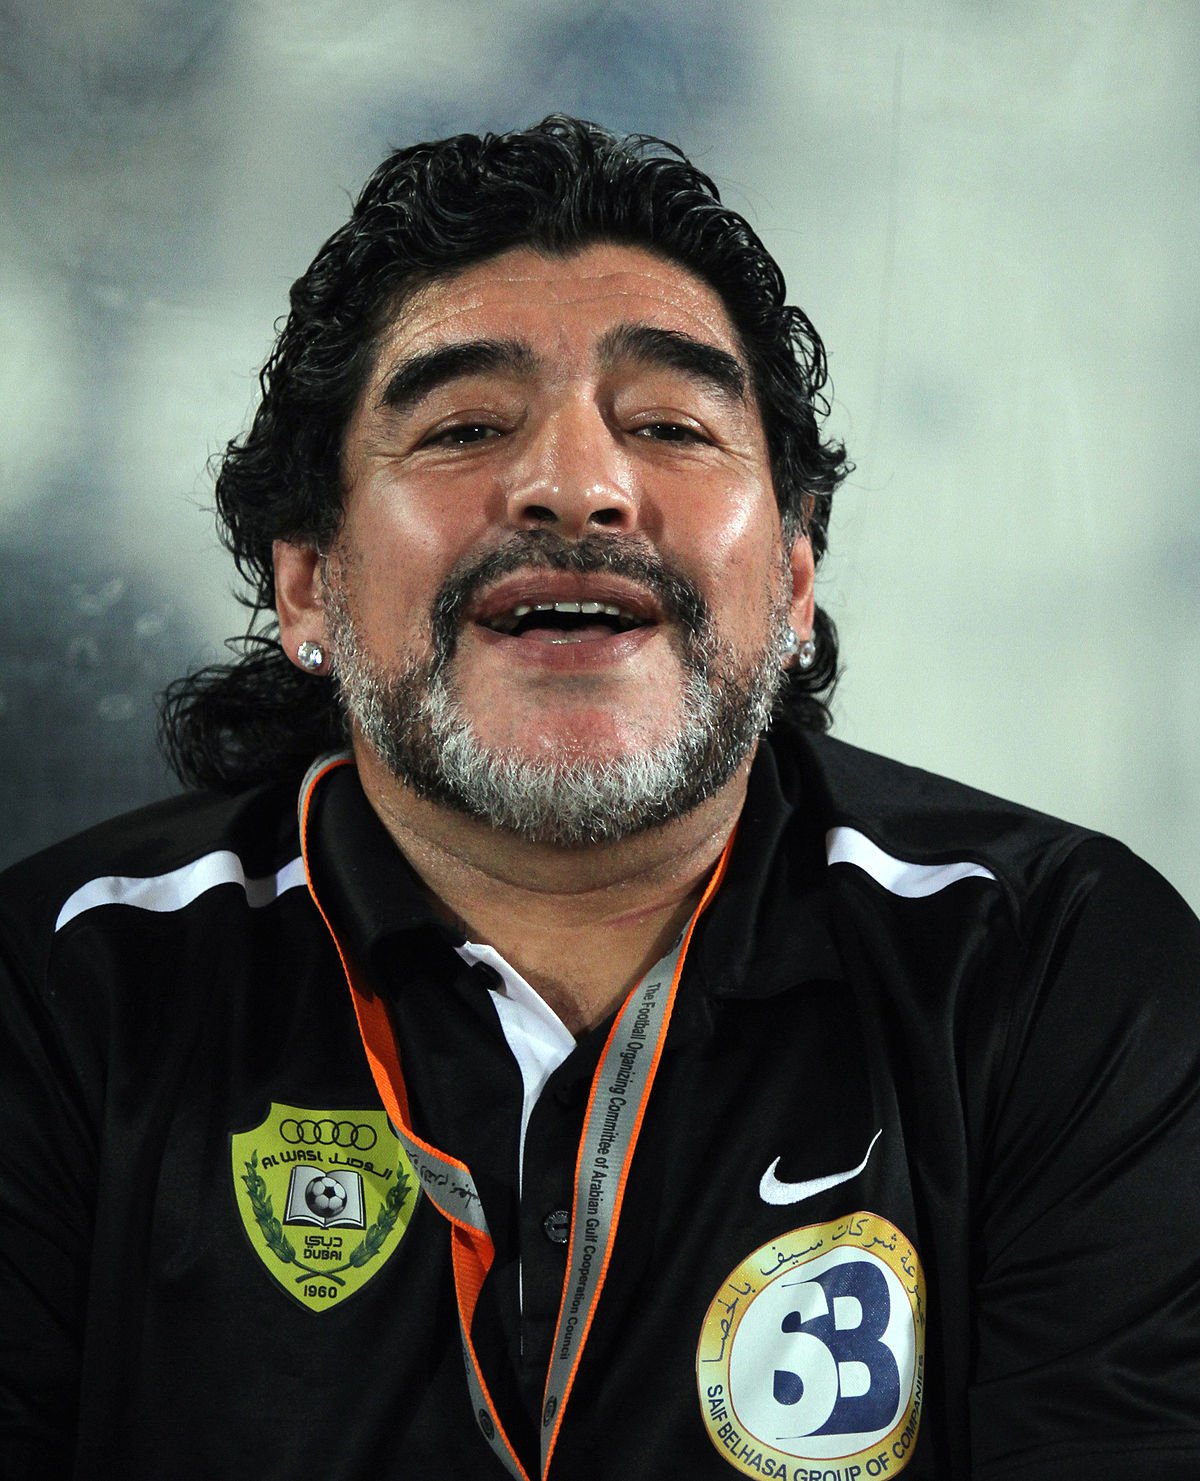 Venezuelan government expresses condolences on the death of Maradona